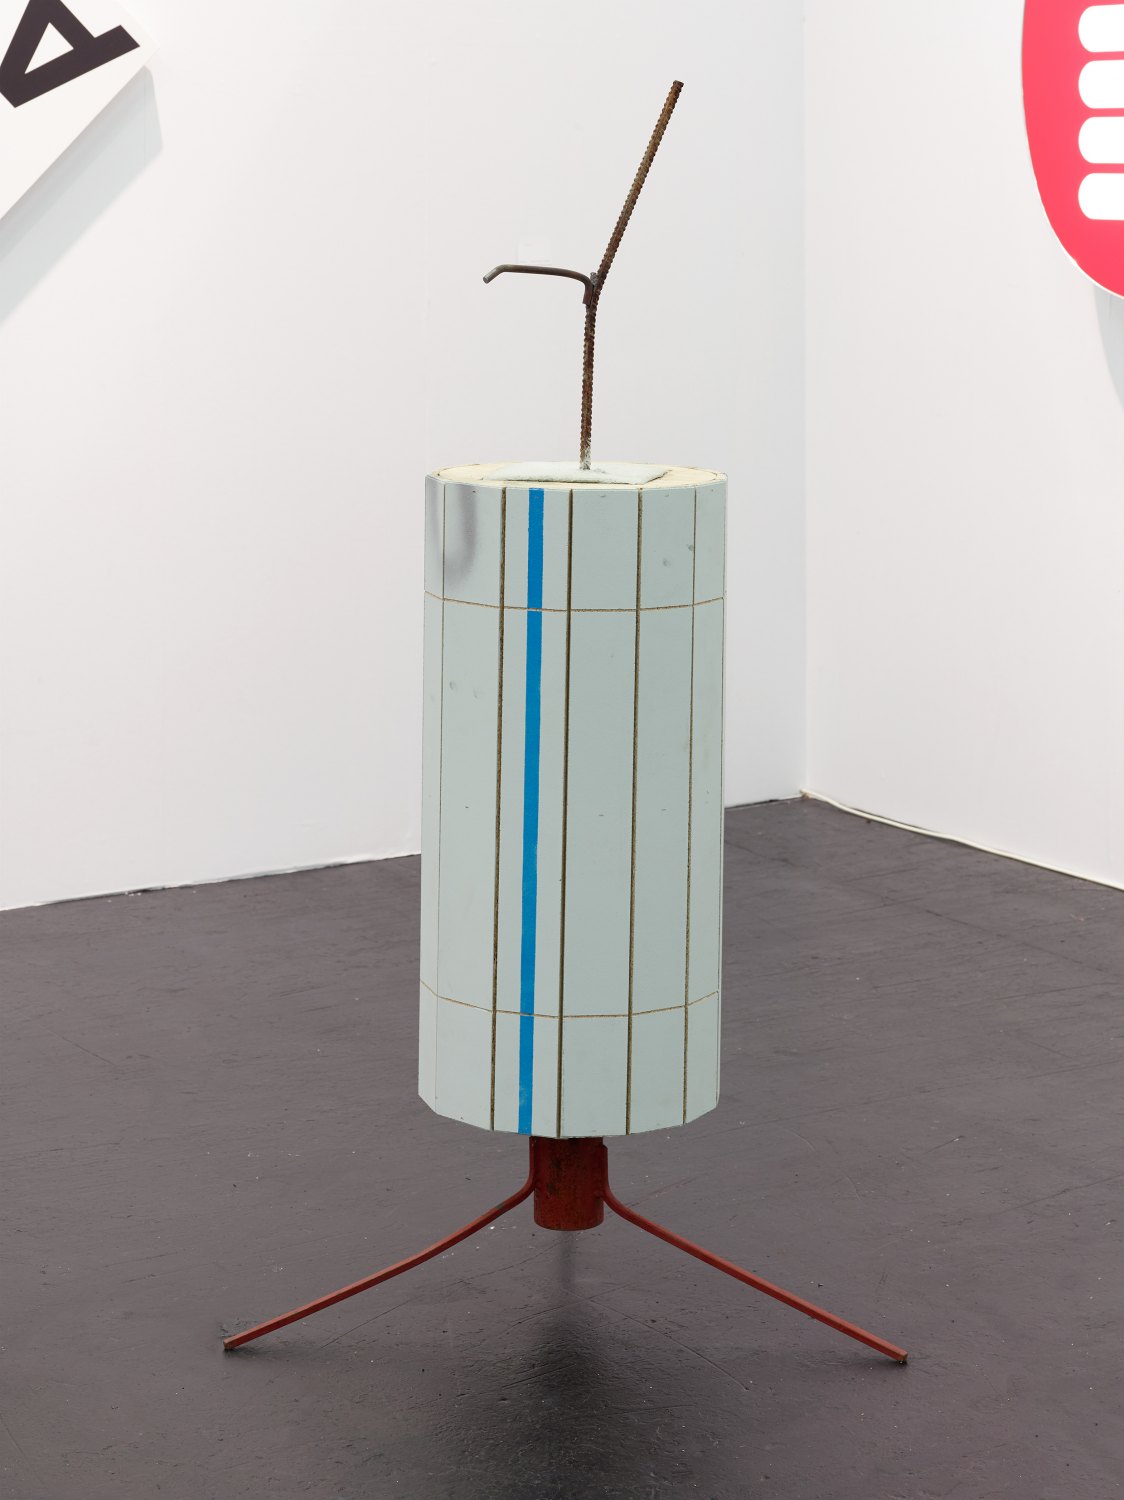 Manfred Pernice  für Inge Deutschkron, 2018  Wood, concrete, metal, 156 x 80 x 80 cm